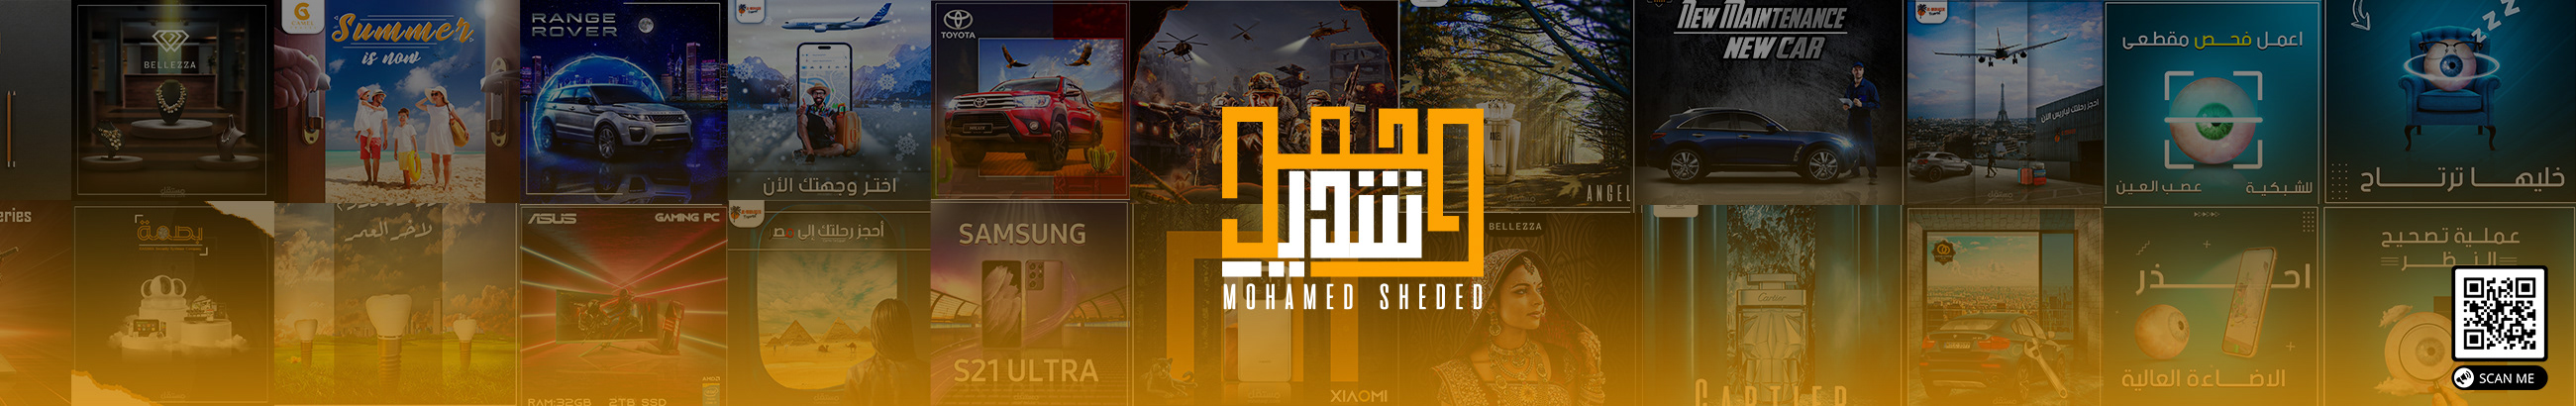 Mohammed Sheded's profile banner